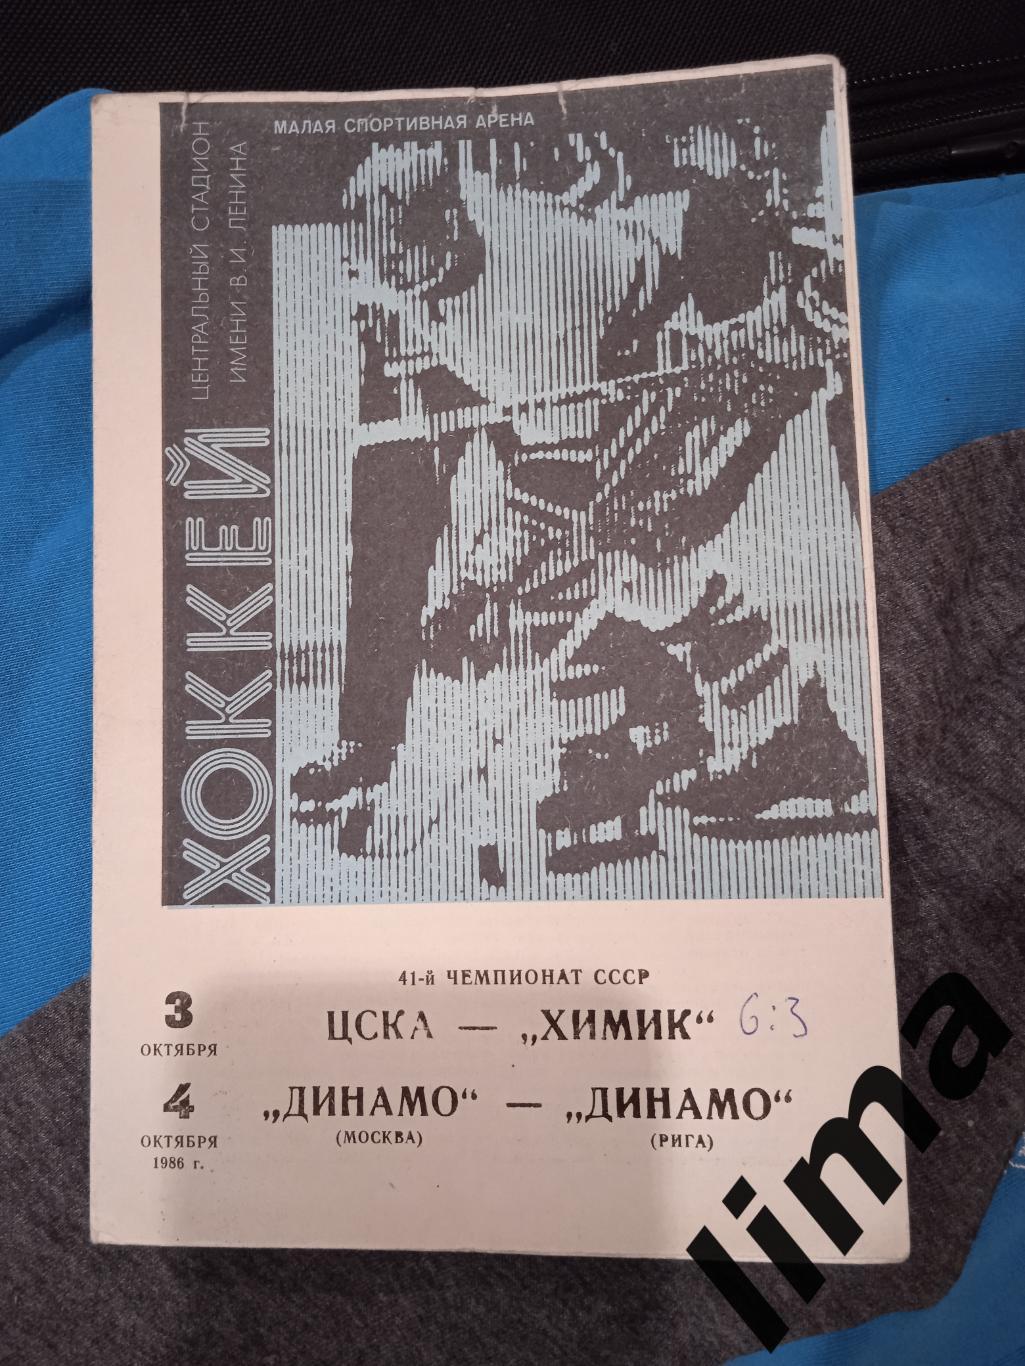 хоккей Цска-Химик,Динамо - Динамо Рига 1986